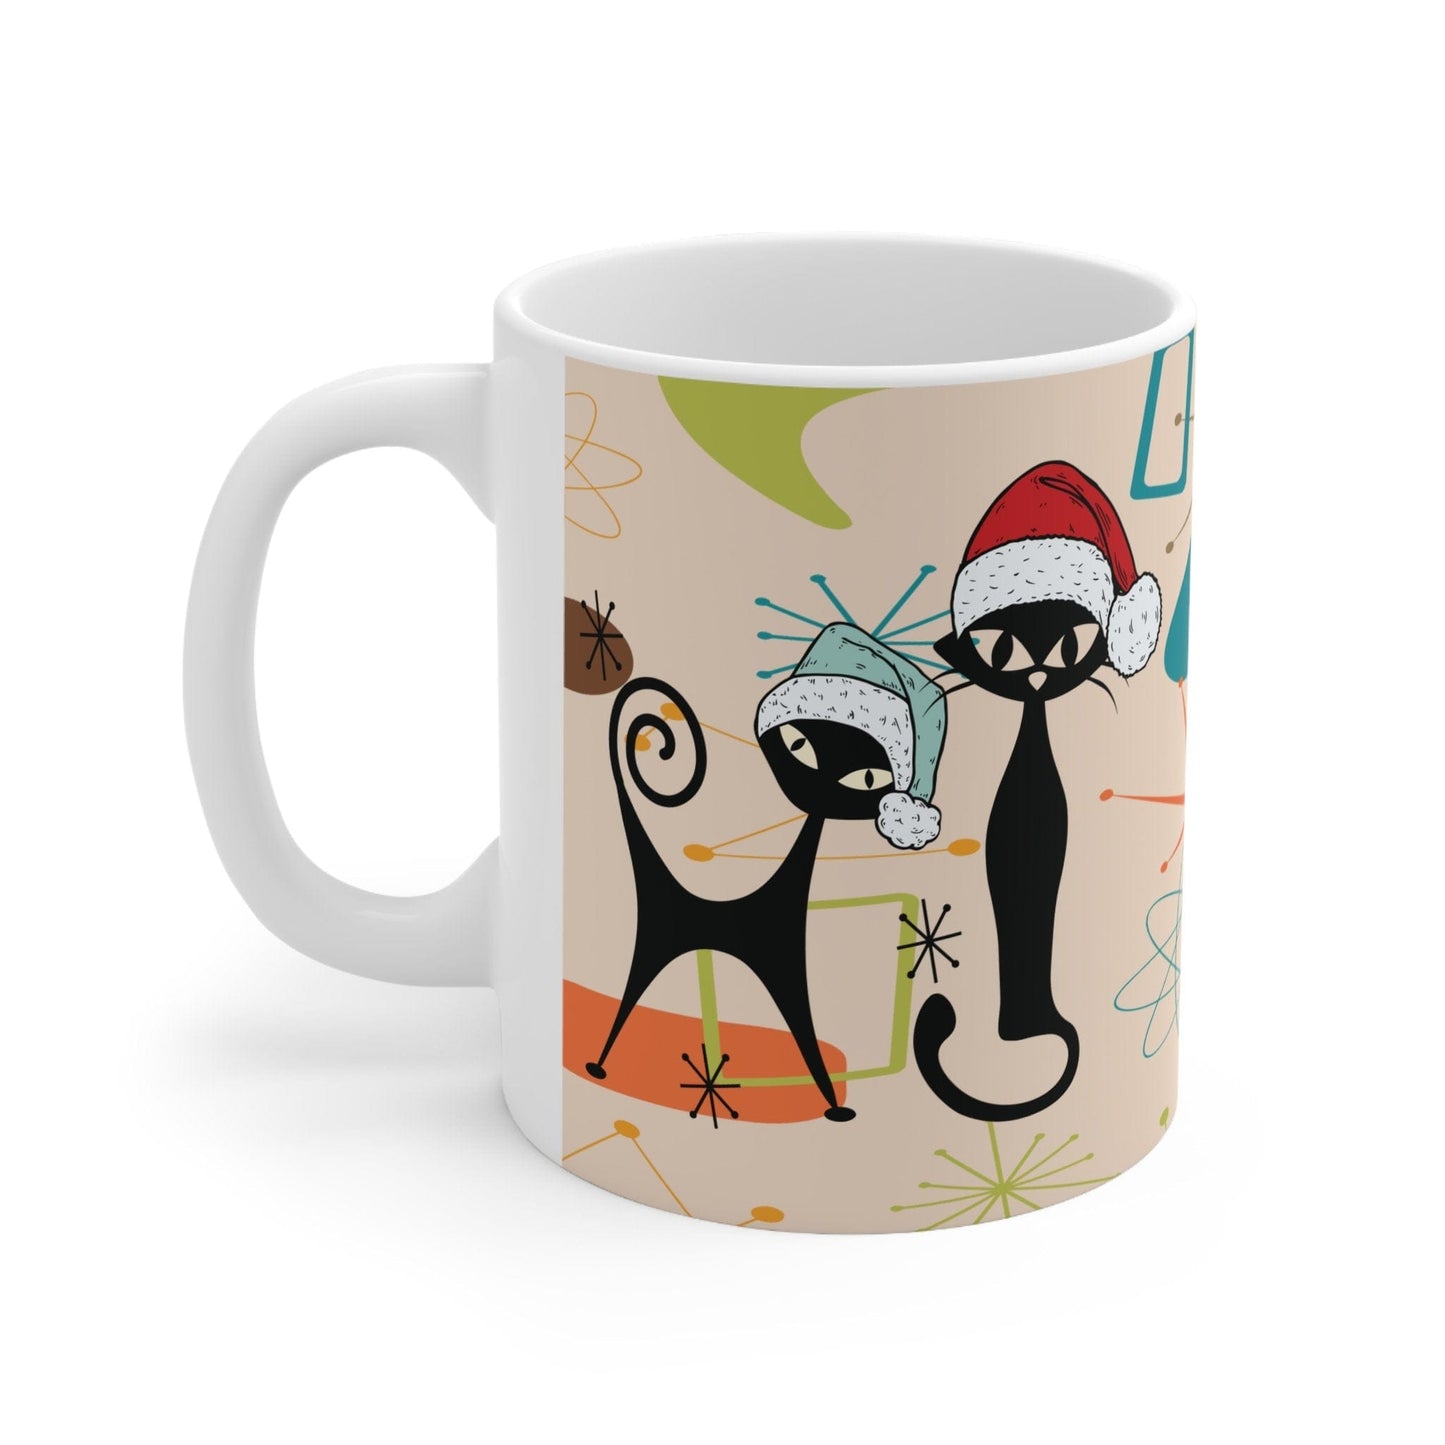 Kate McEnroe New York Atomic Cats Christmas Mug, Mid Century Modern Retro Boomerang Starburst Holiday Drinkware, Kitschy Holiday Gift 29014389796606680698